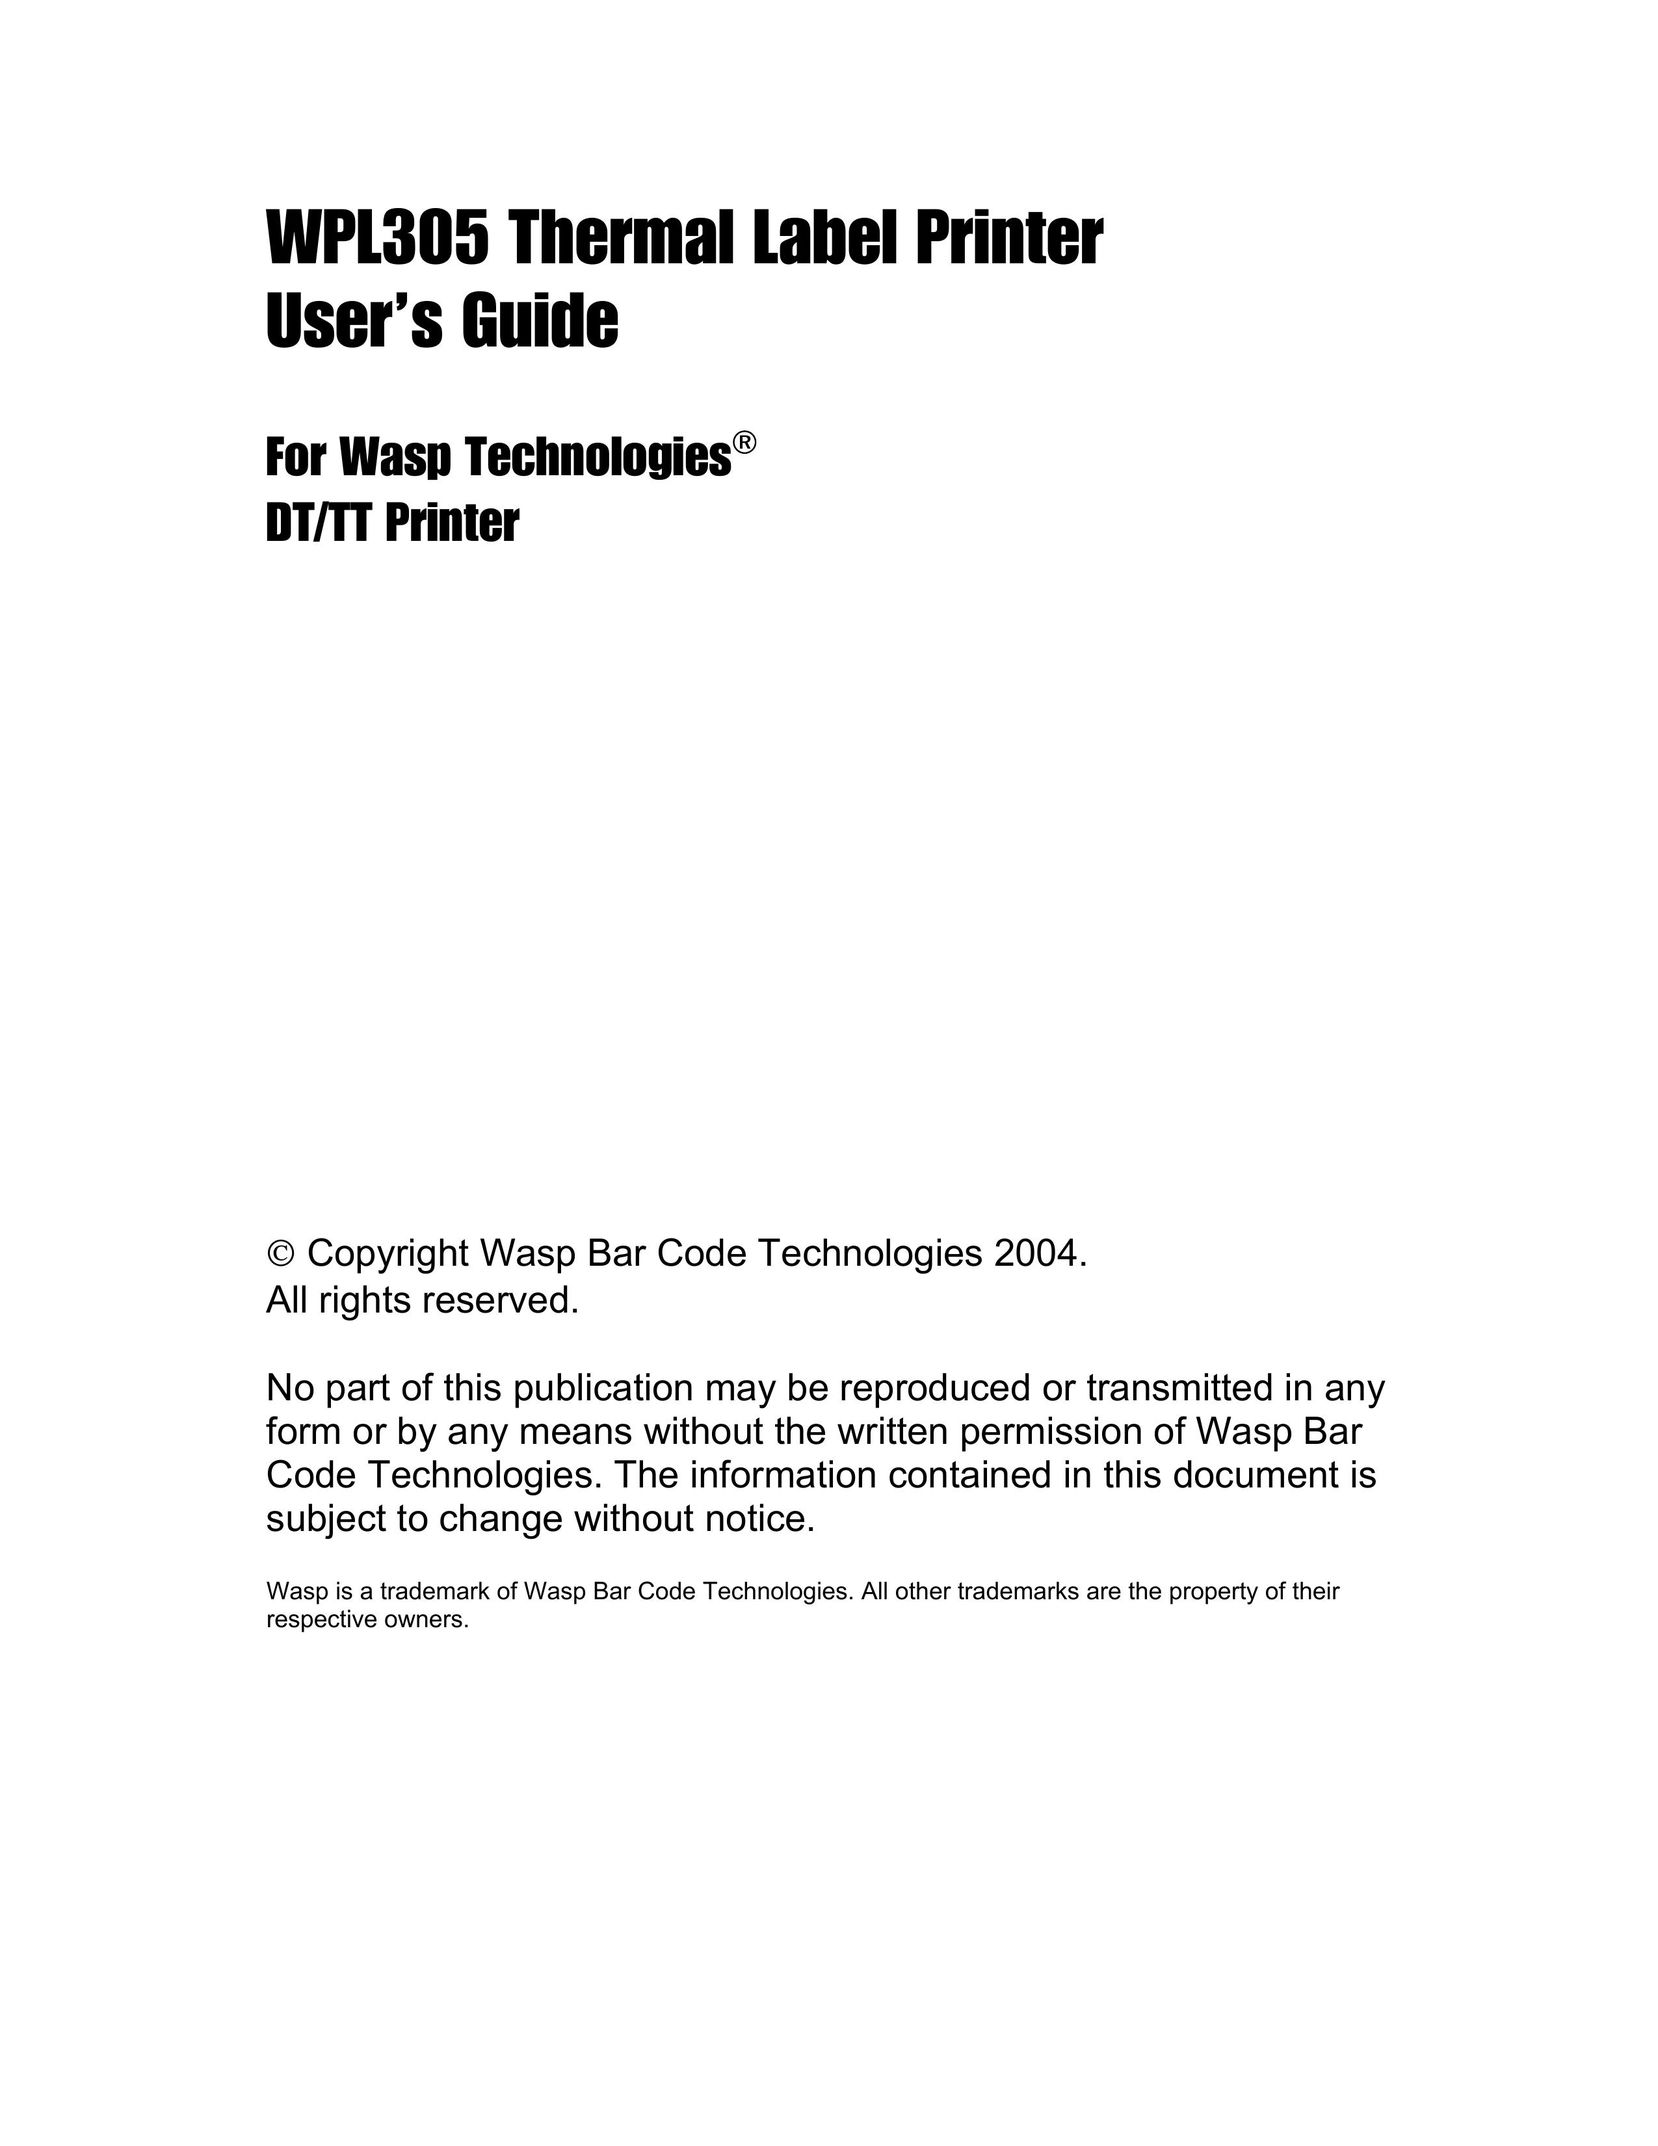 Wasp Bar Code WPL305 Printer User Manual